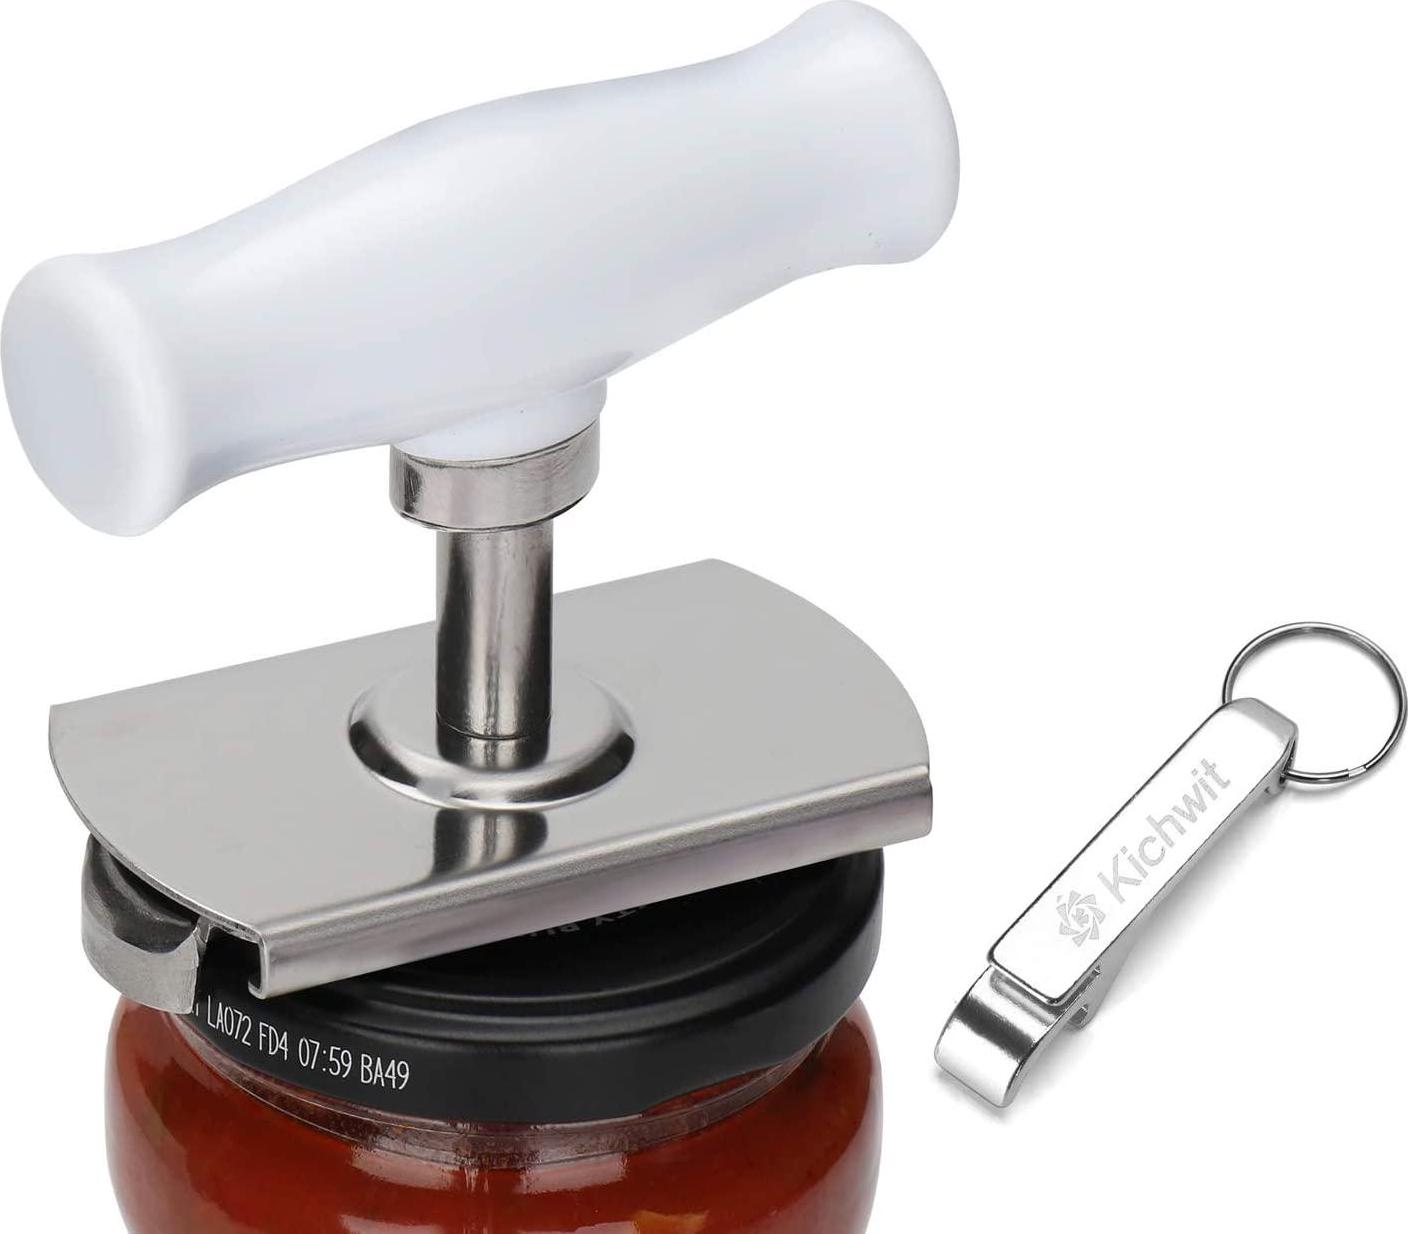 Kichwit, Kichwit Arthritis Jar Opener Stainless Steel Lids Off Jar Opener - Free Bottle Opener Keychain Included